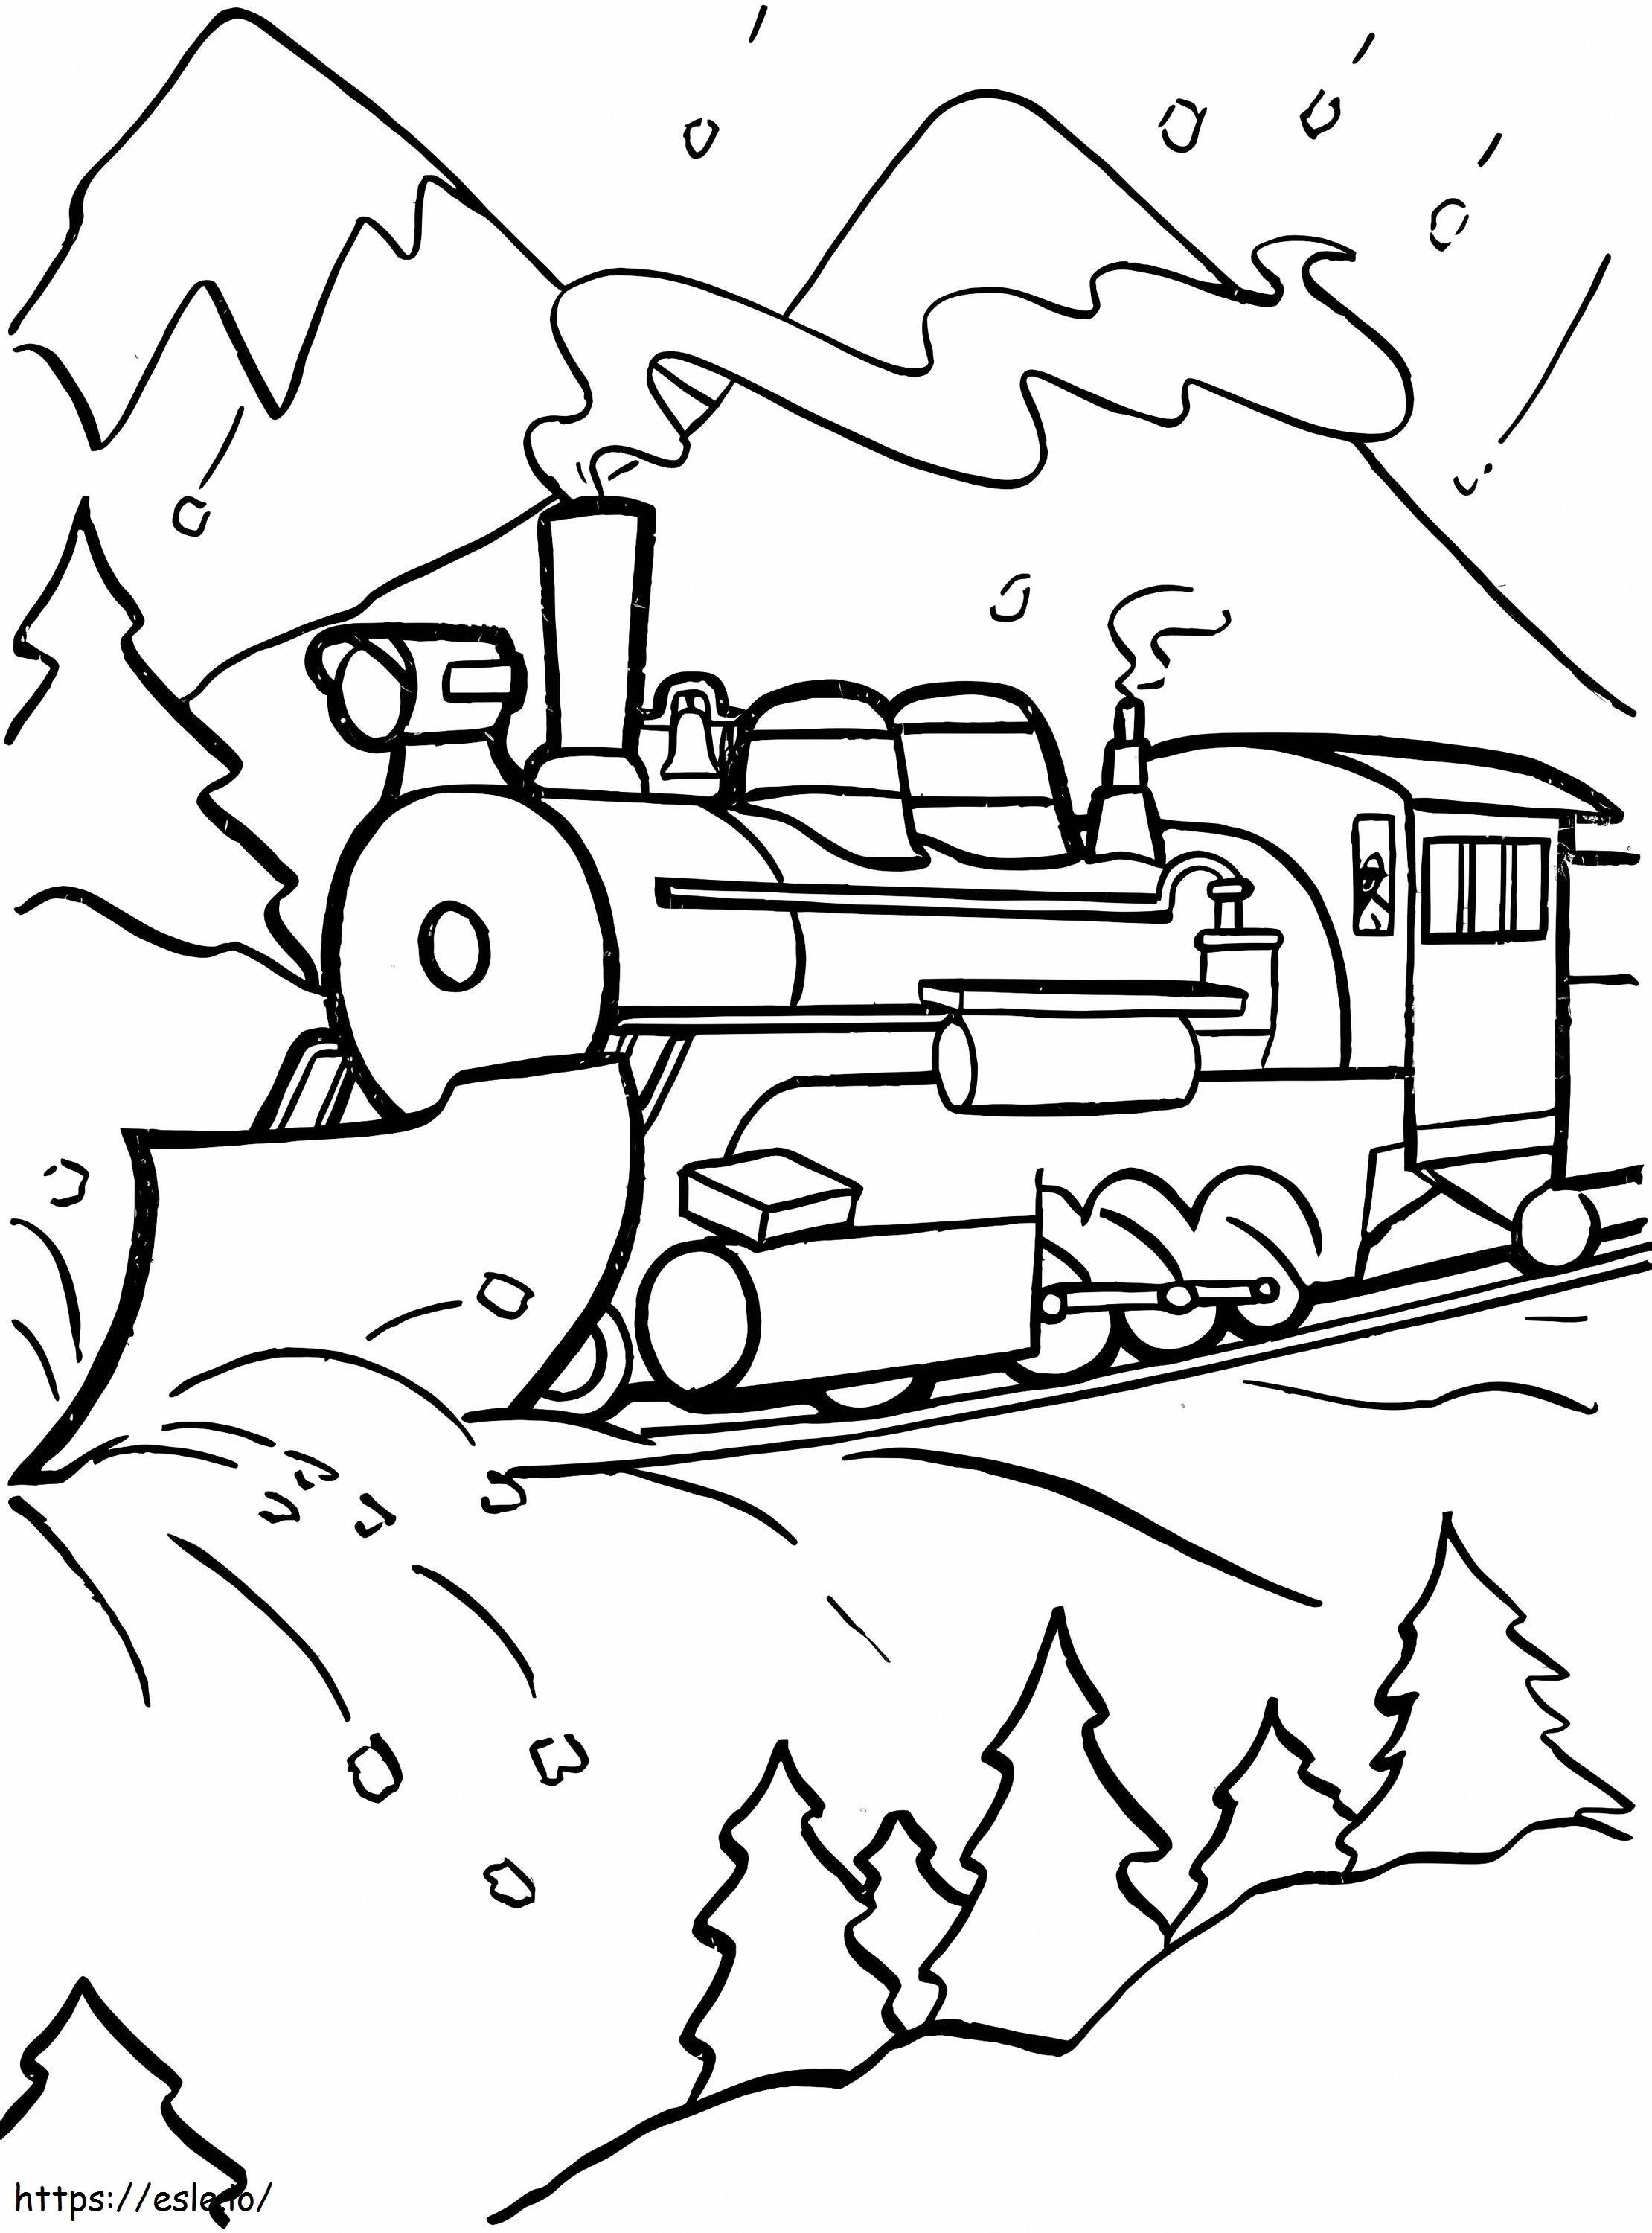 Printable Polar Express Train coloring page